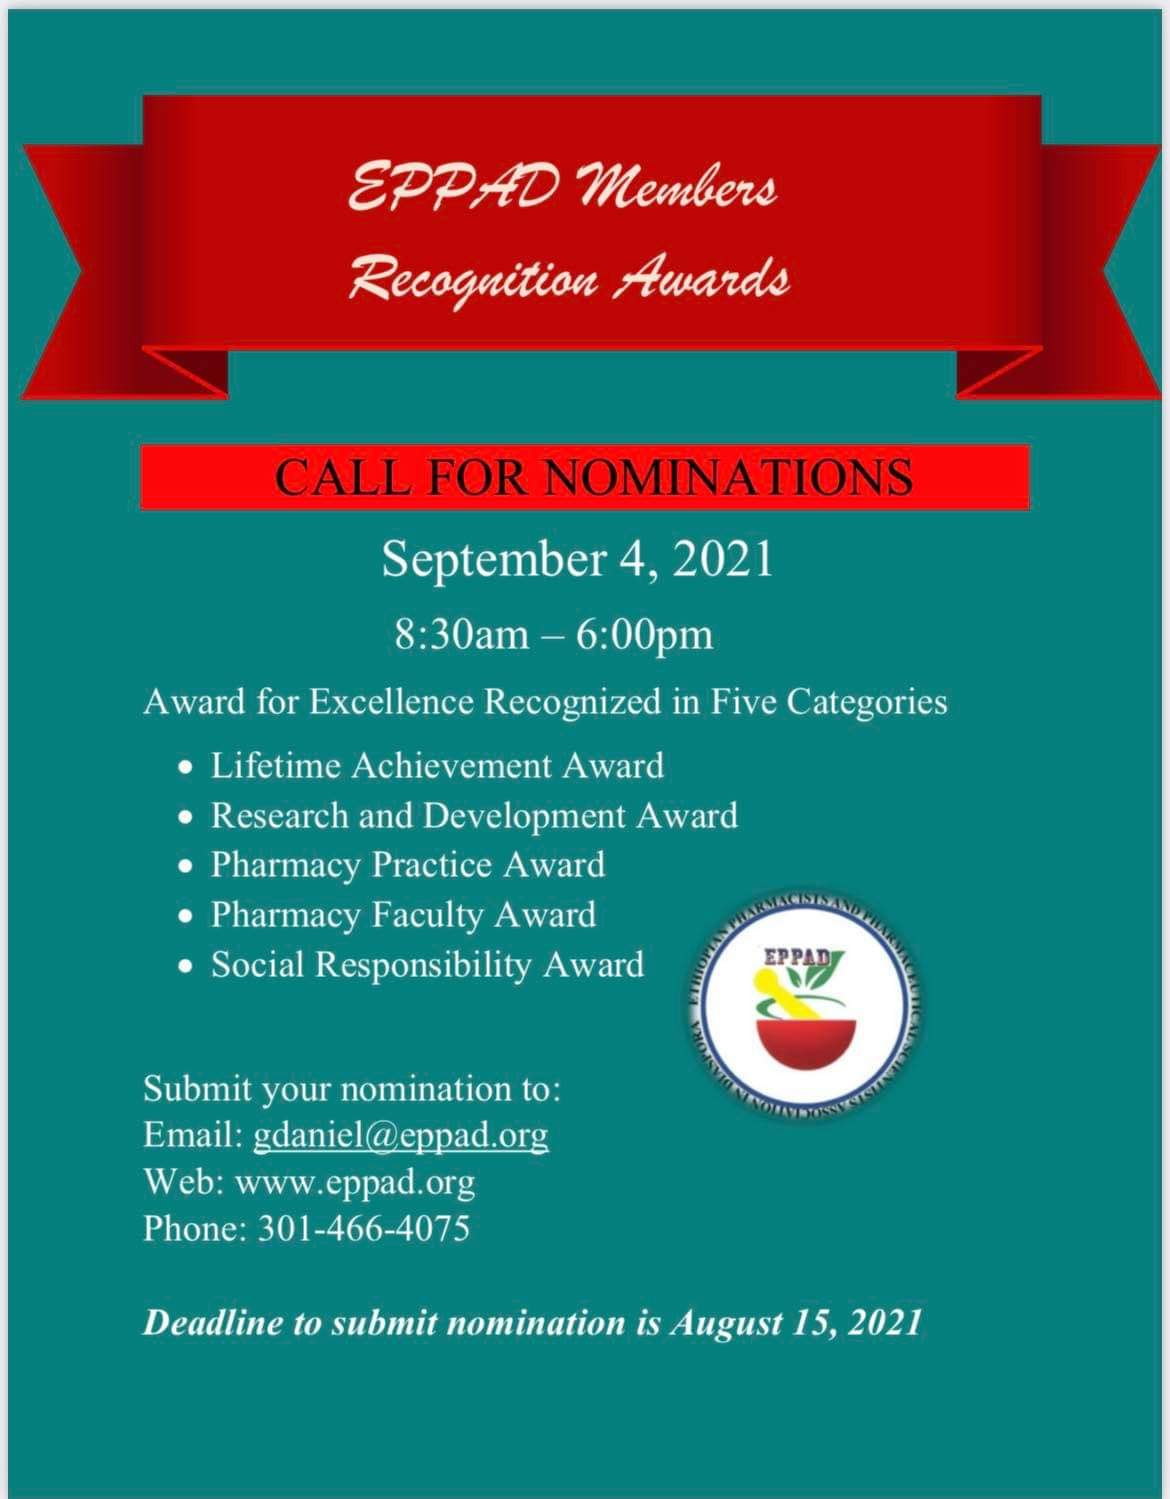 EPPAD Award for Excellence